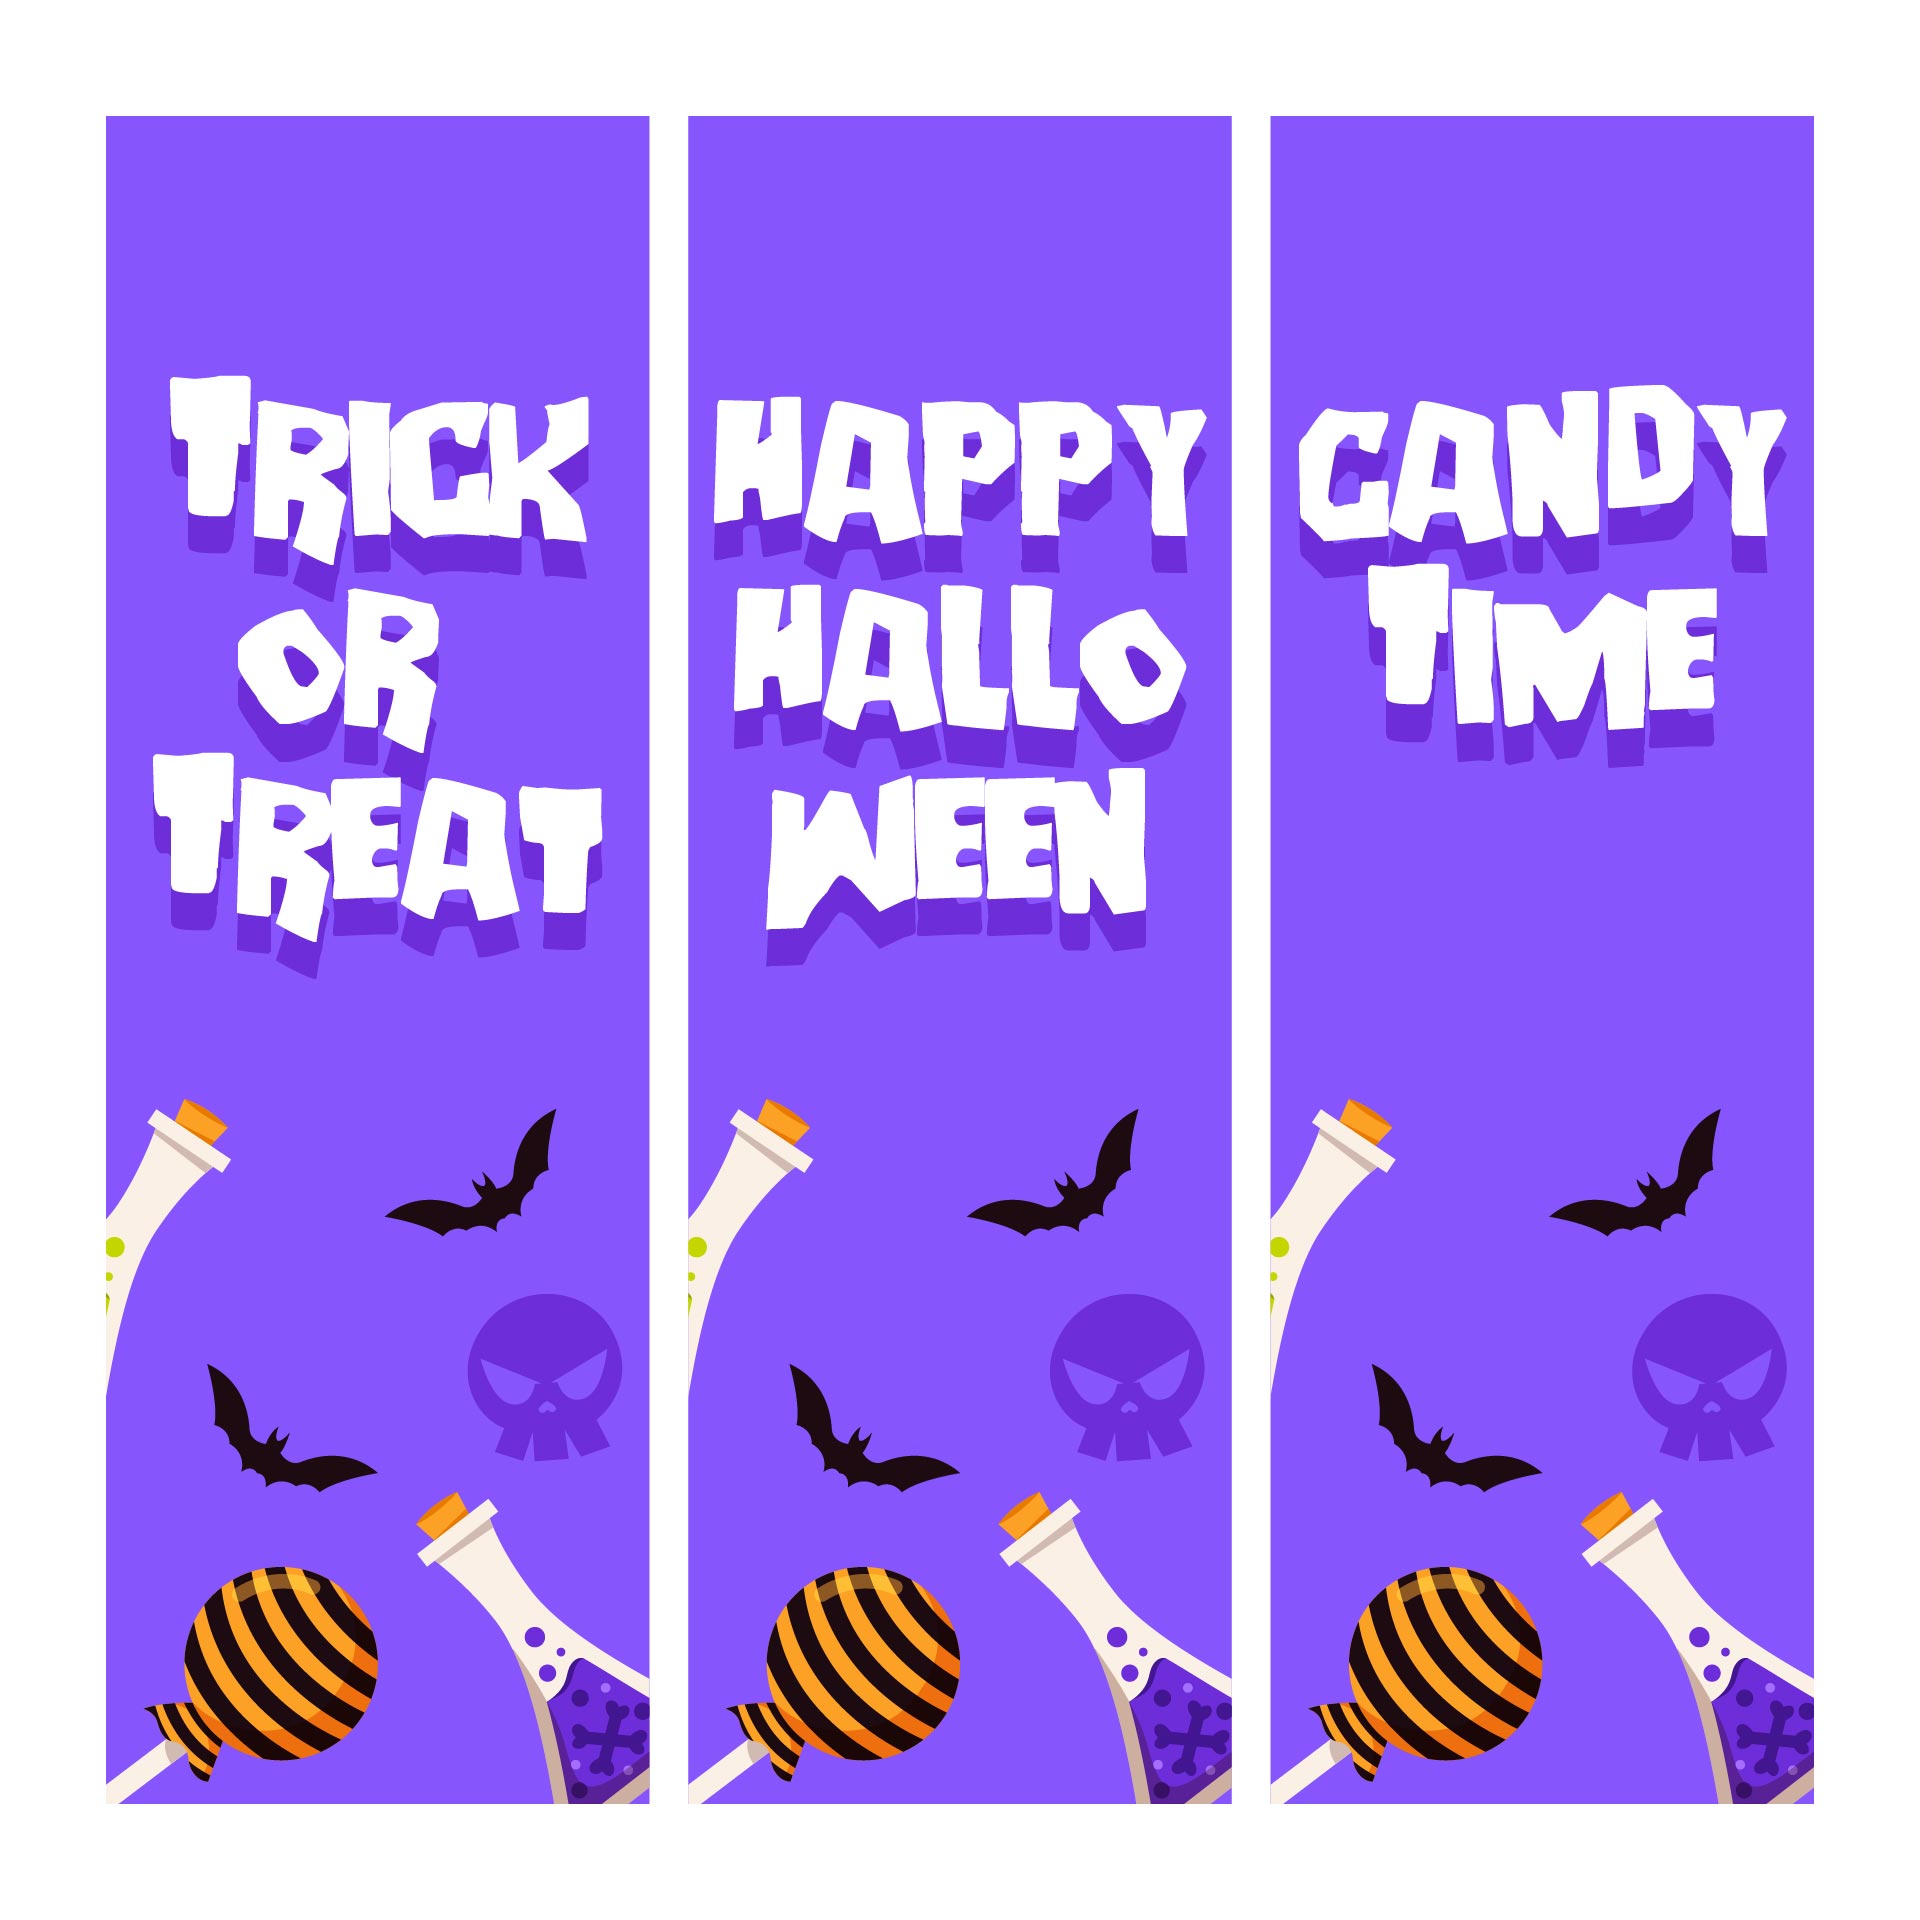 Halloween Bookmarks to Print